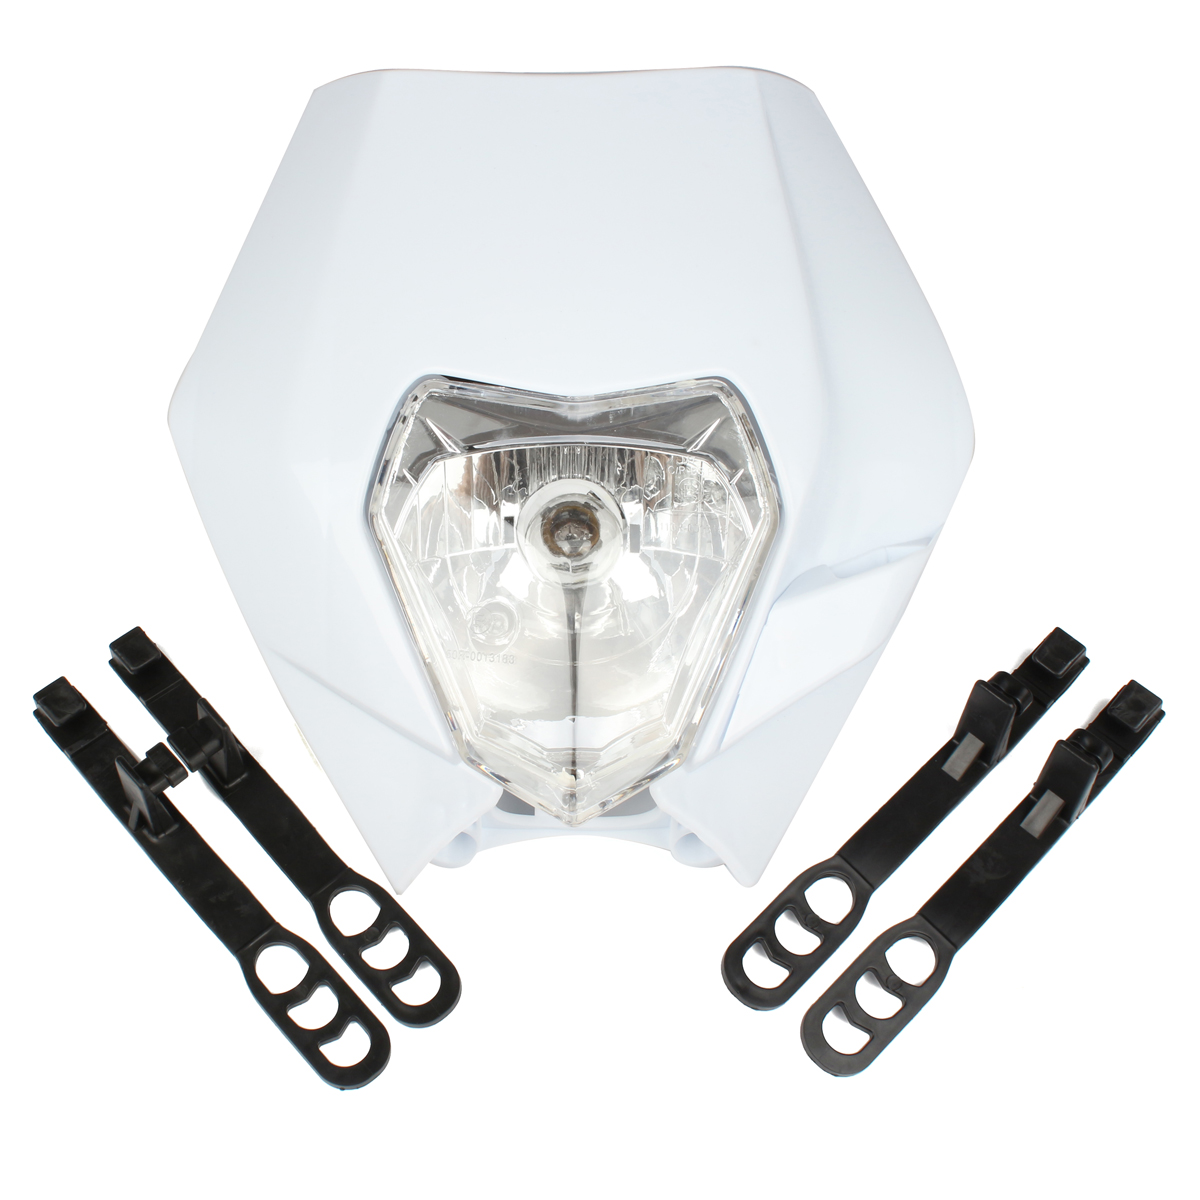 Amber Light Headlights Headlamp for EXC EXCF XCF XCW SXF SMR Enduro